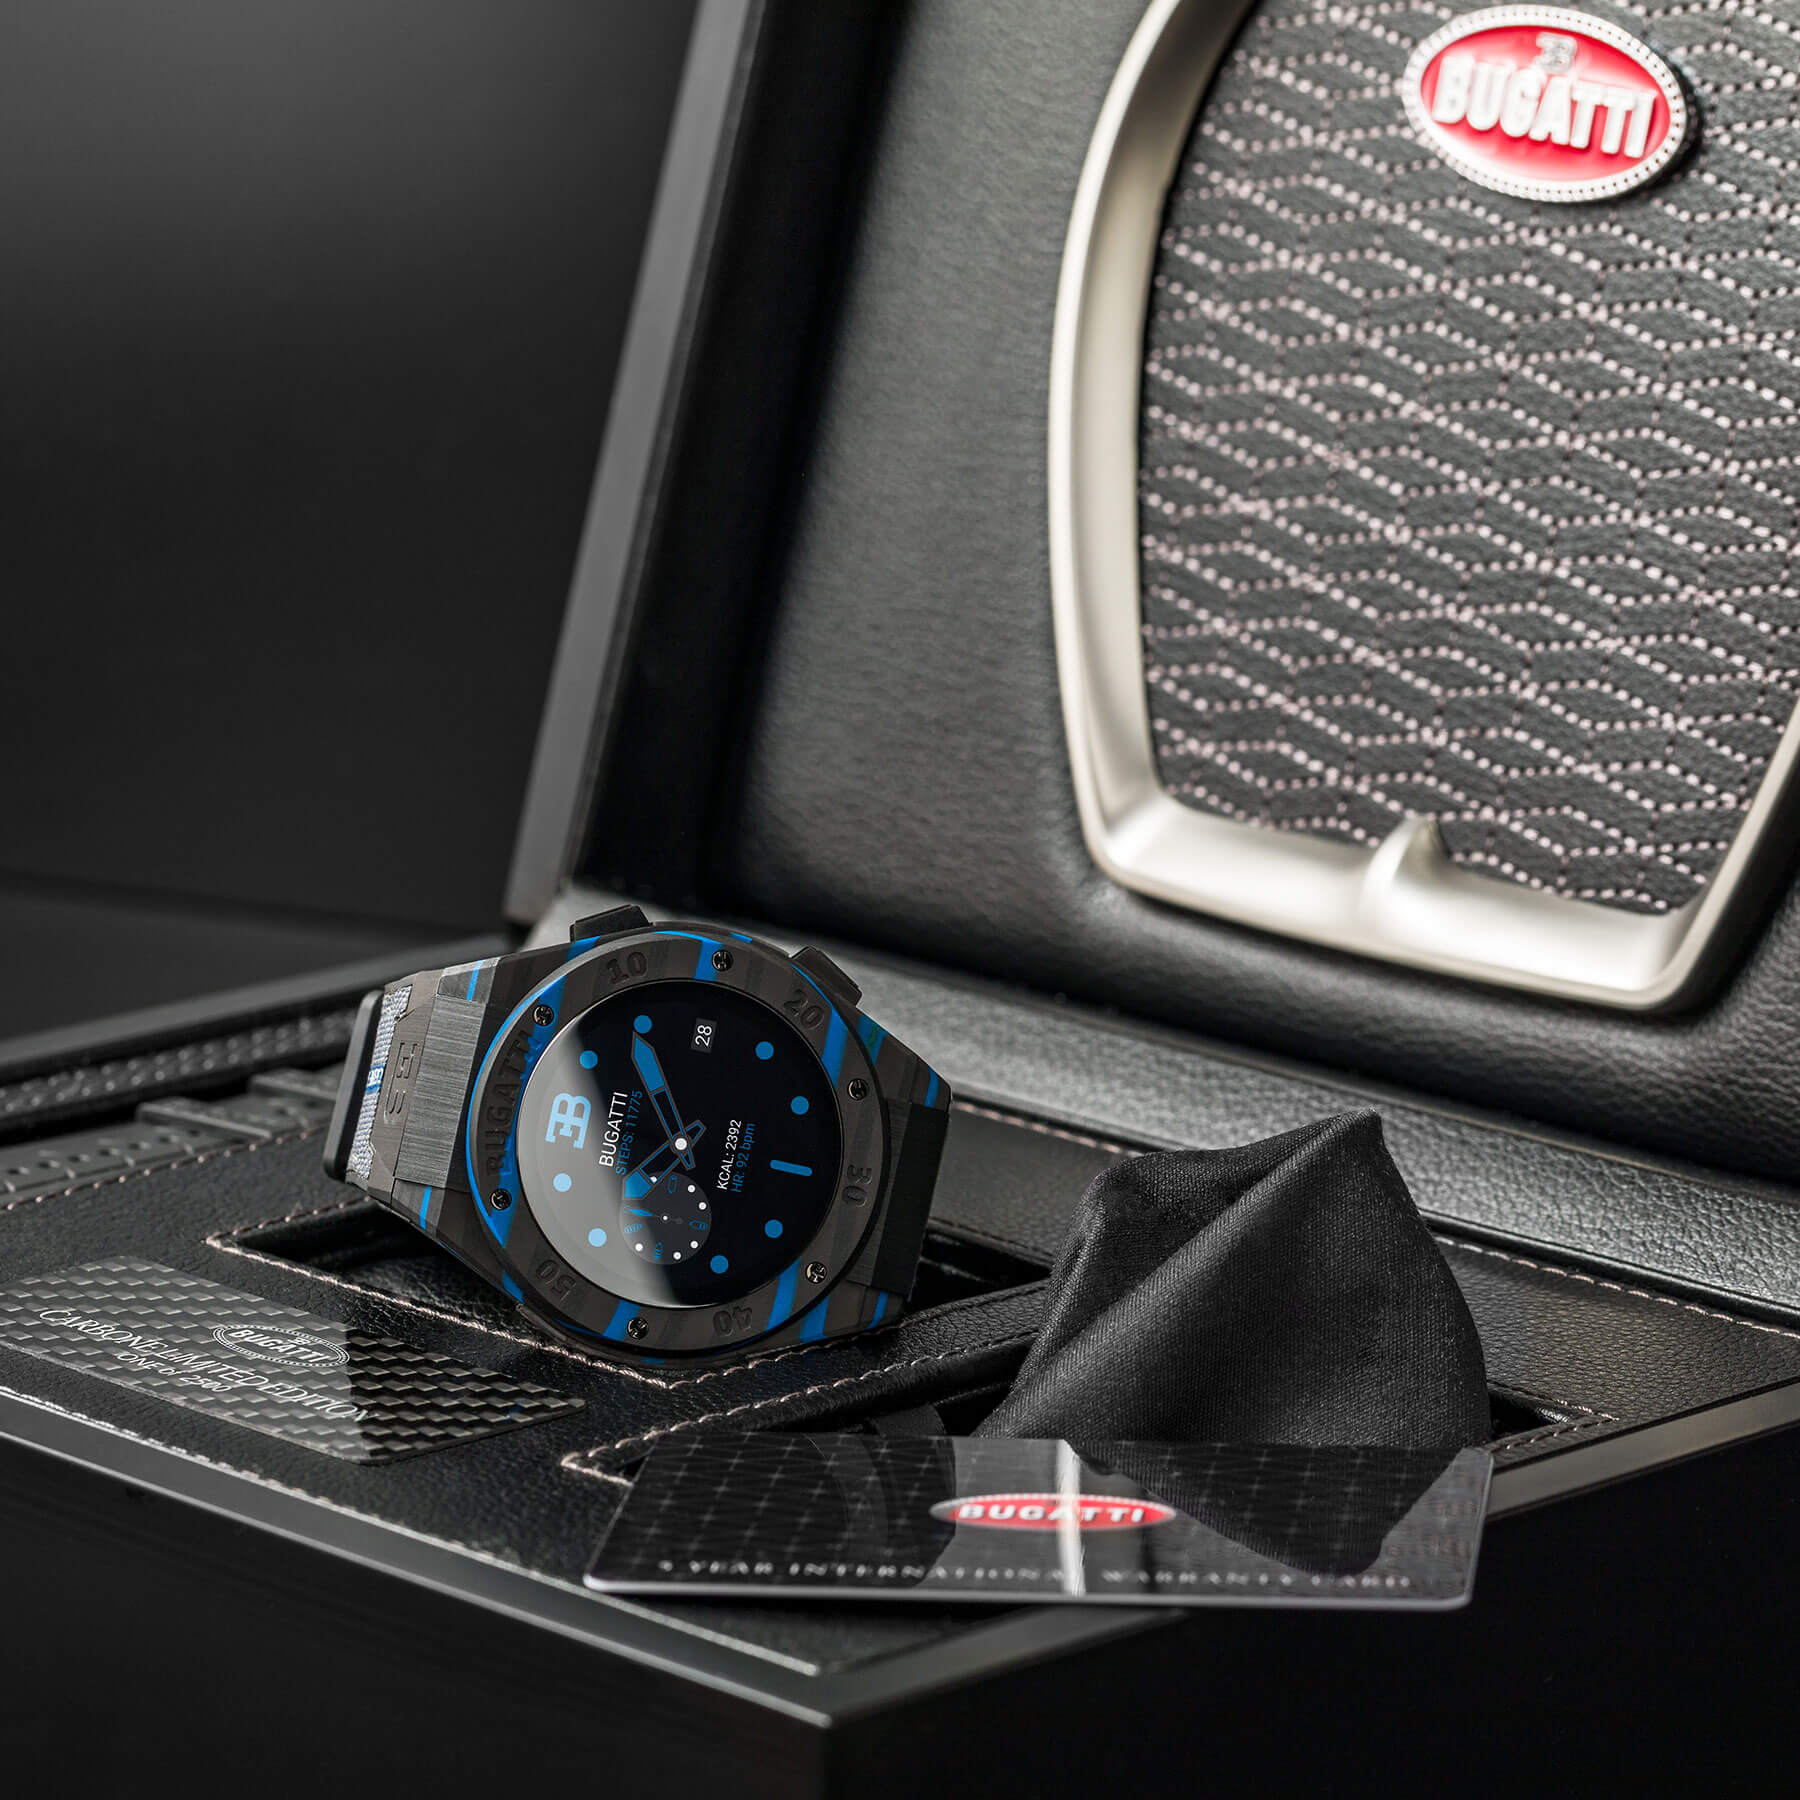 Bugatti Carbone Limited Edition Collection